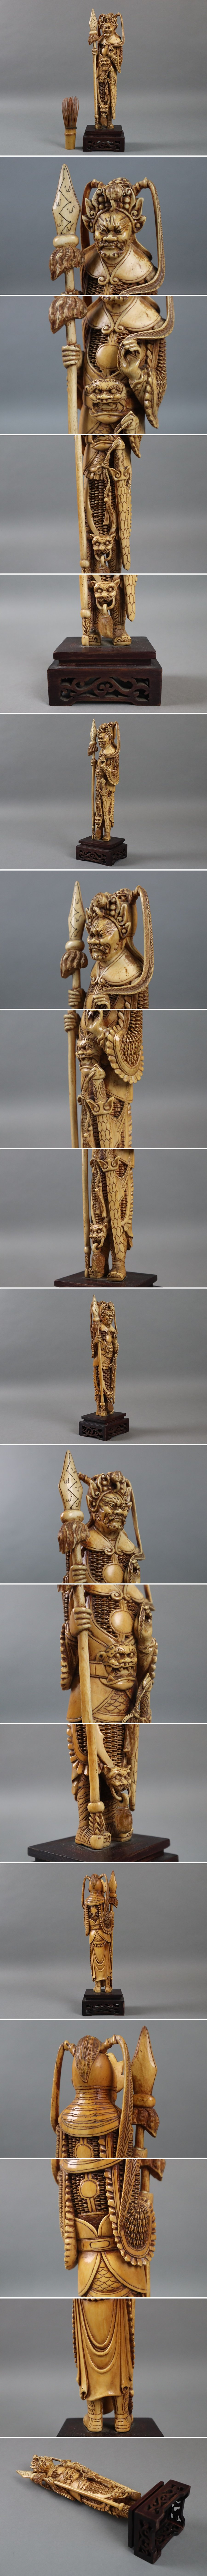 置物 時代物 鹿2匹 天然素材 マンモス 象牙風 彫刻 骨董 古美術品 www